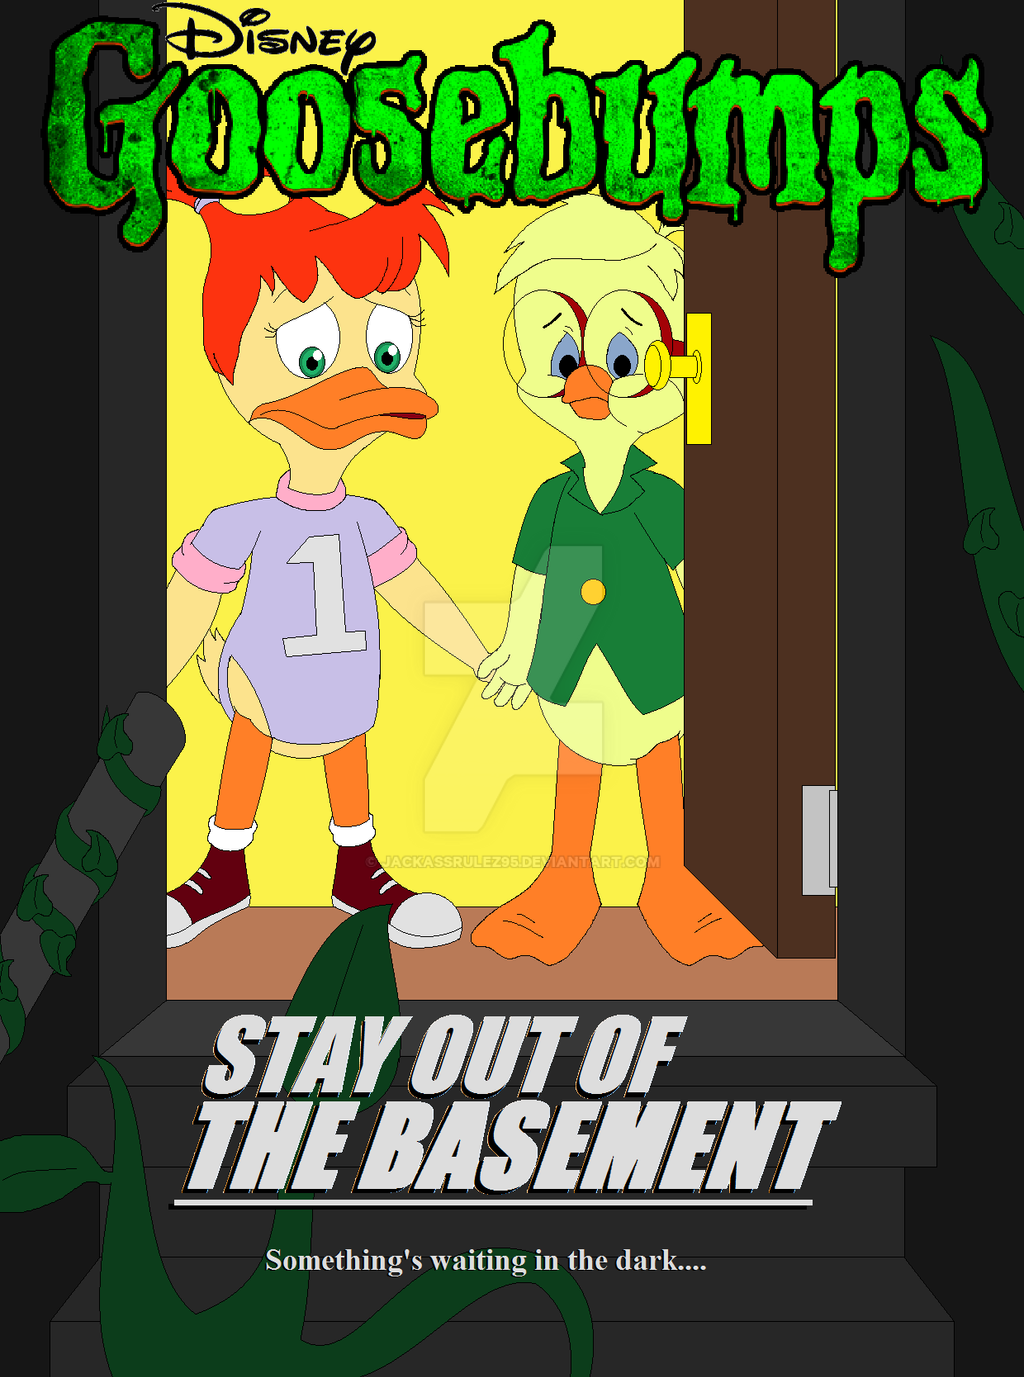 Disneys Goosebumps Stay Out Of The Basement By JackassRulez95 On